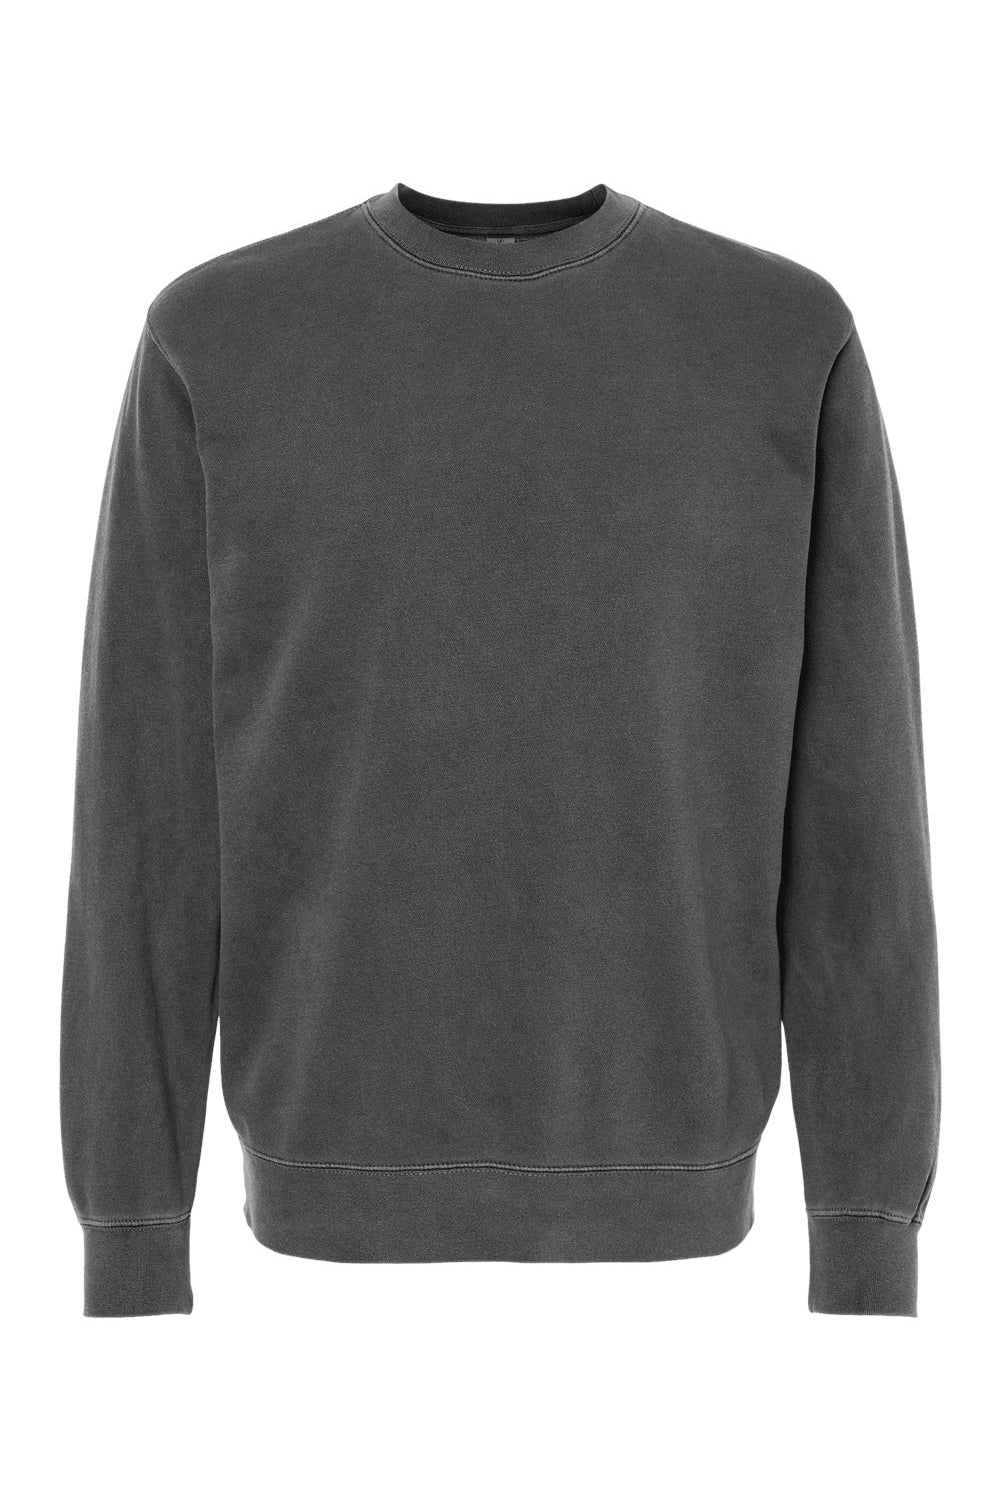 Independent Trading Co. PRM3500 Mens Pigment Dyed Crewneck Sweatshirt Black Flat Front